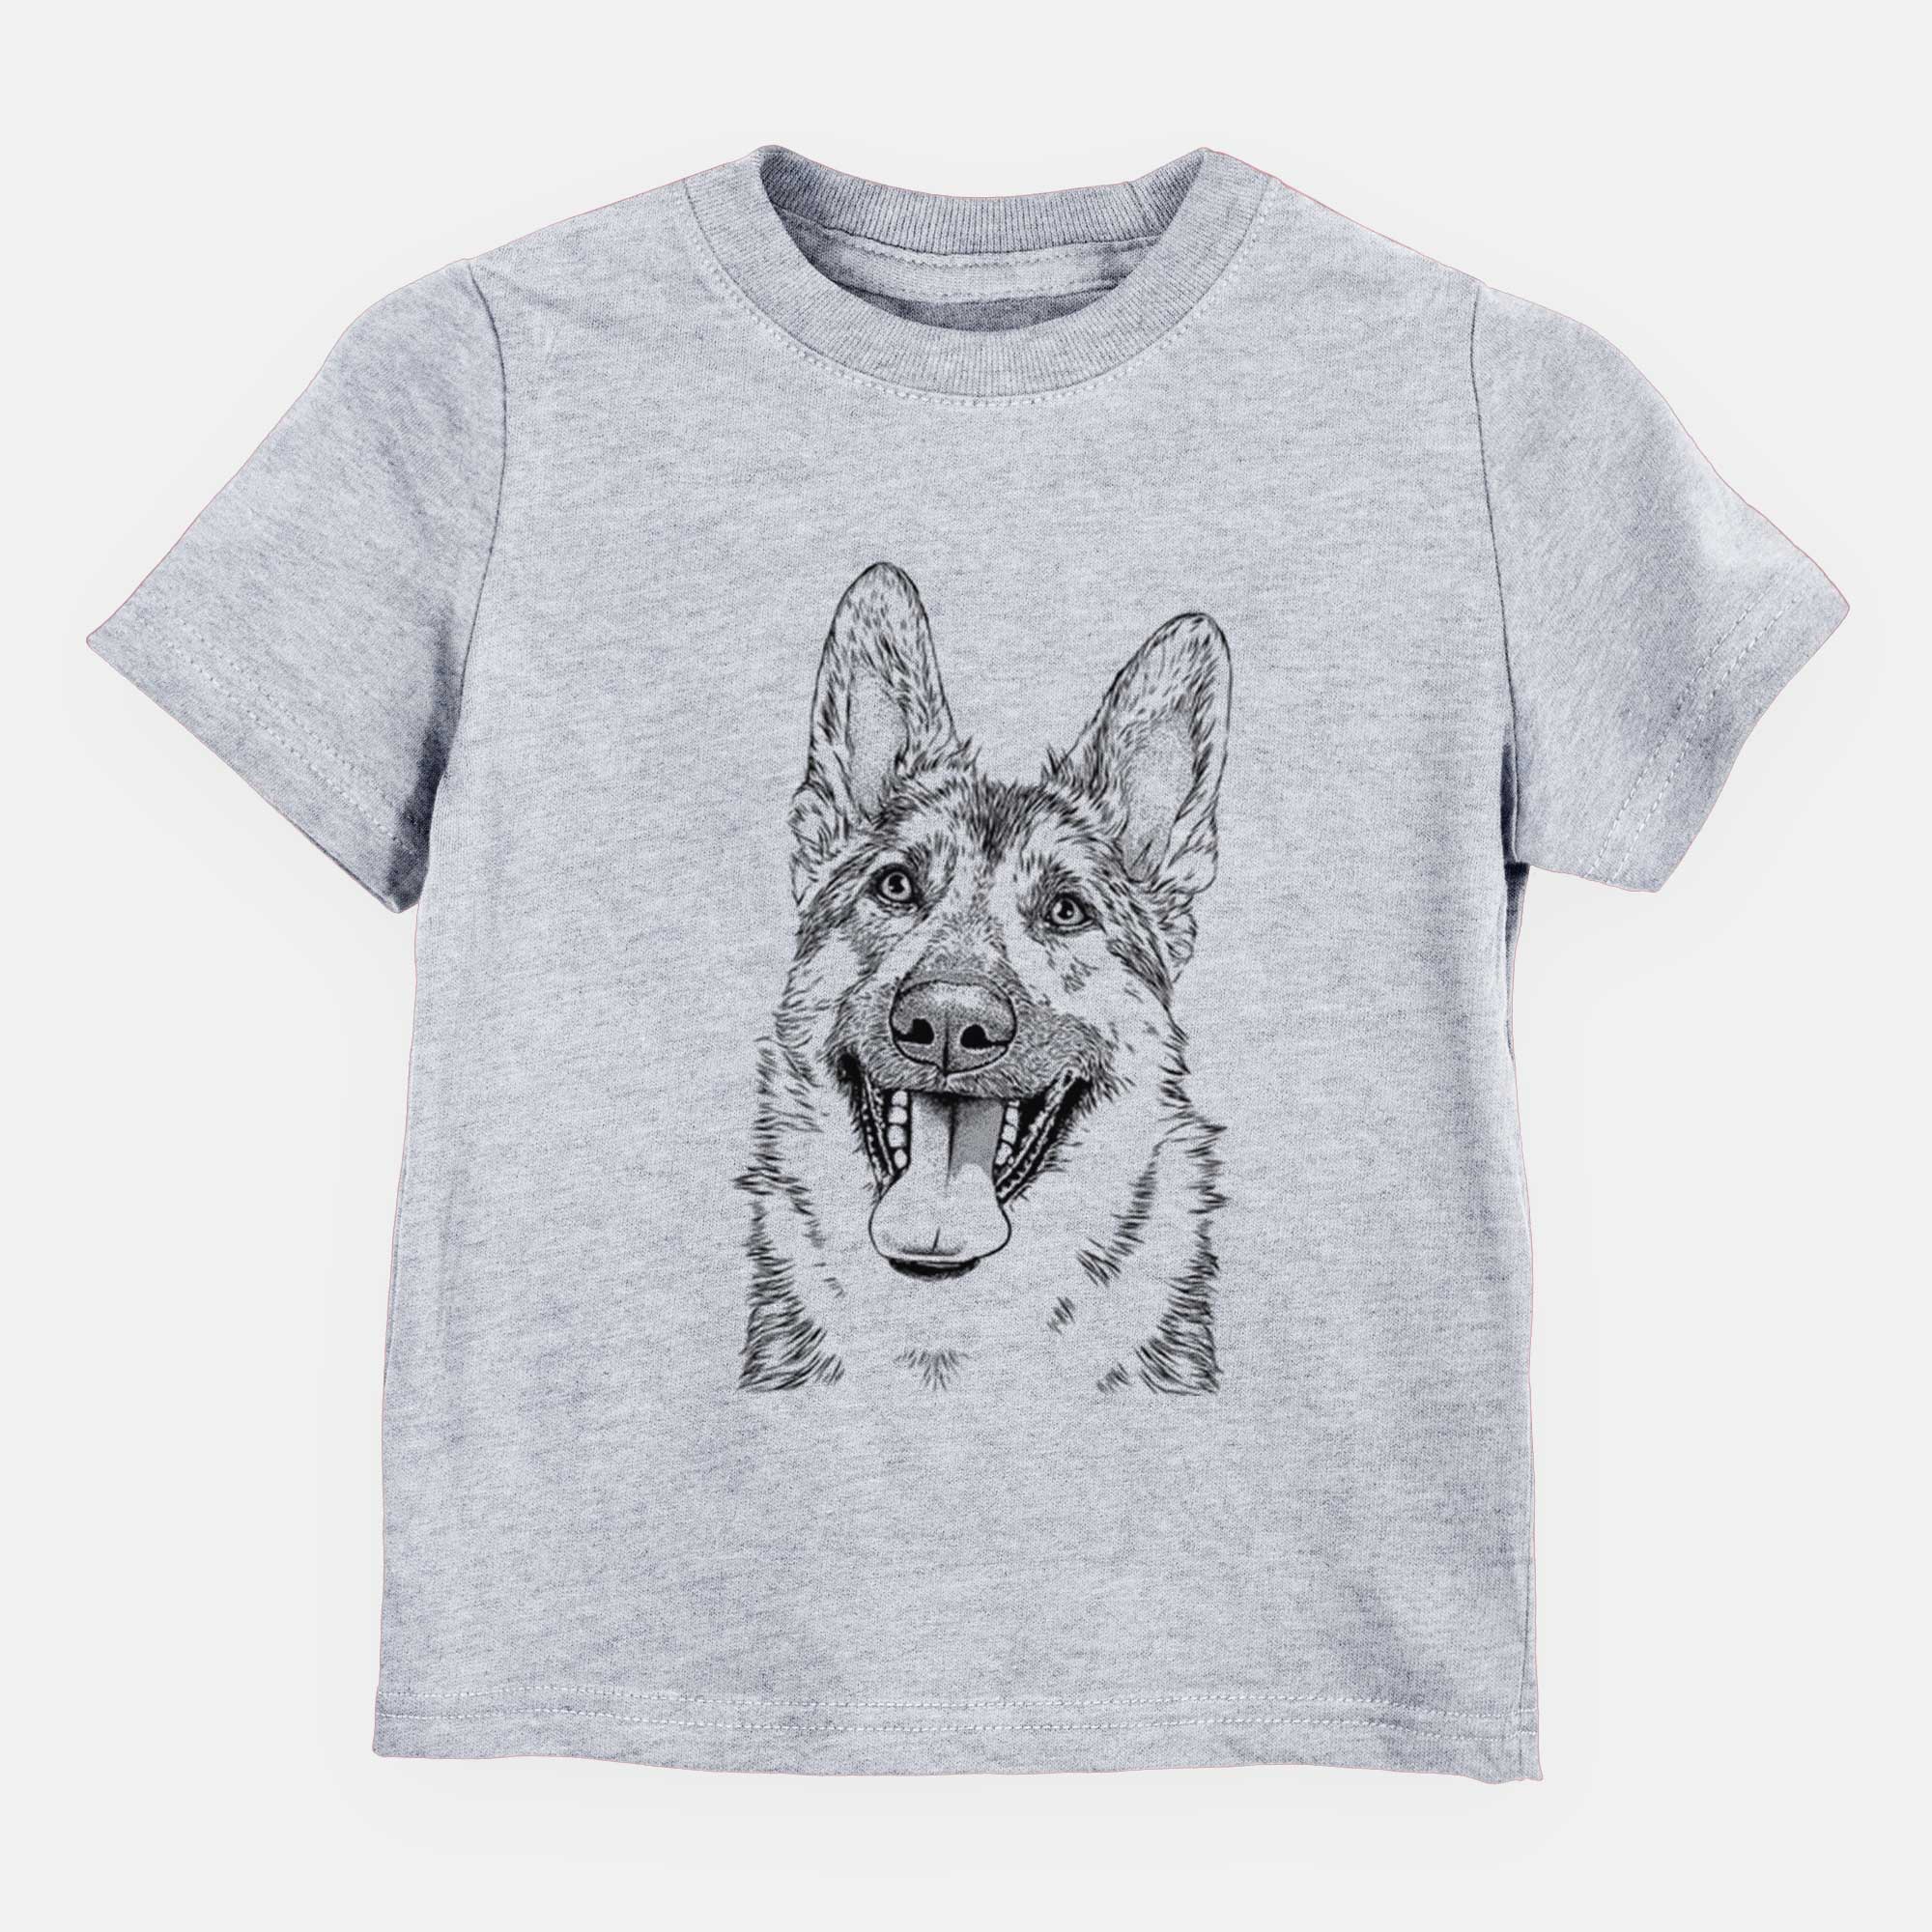 Bare Benson the German Shepherd - Kids/Youth/Toddler Shirt